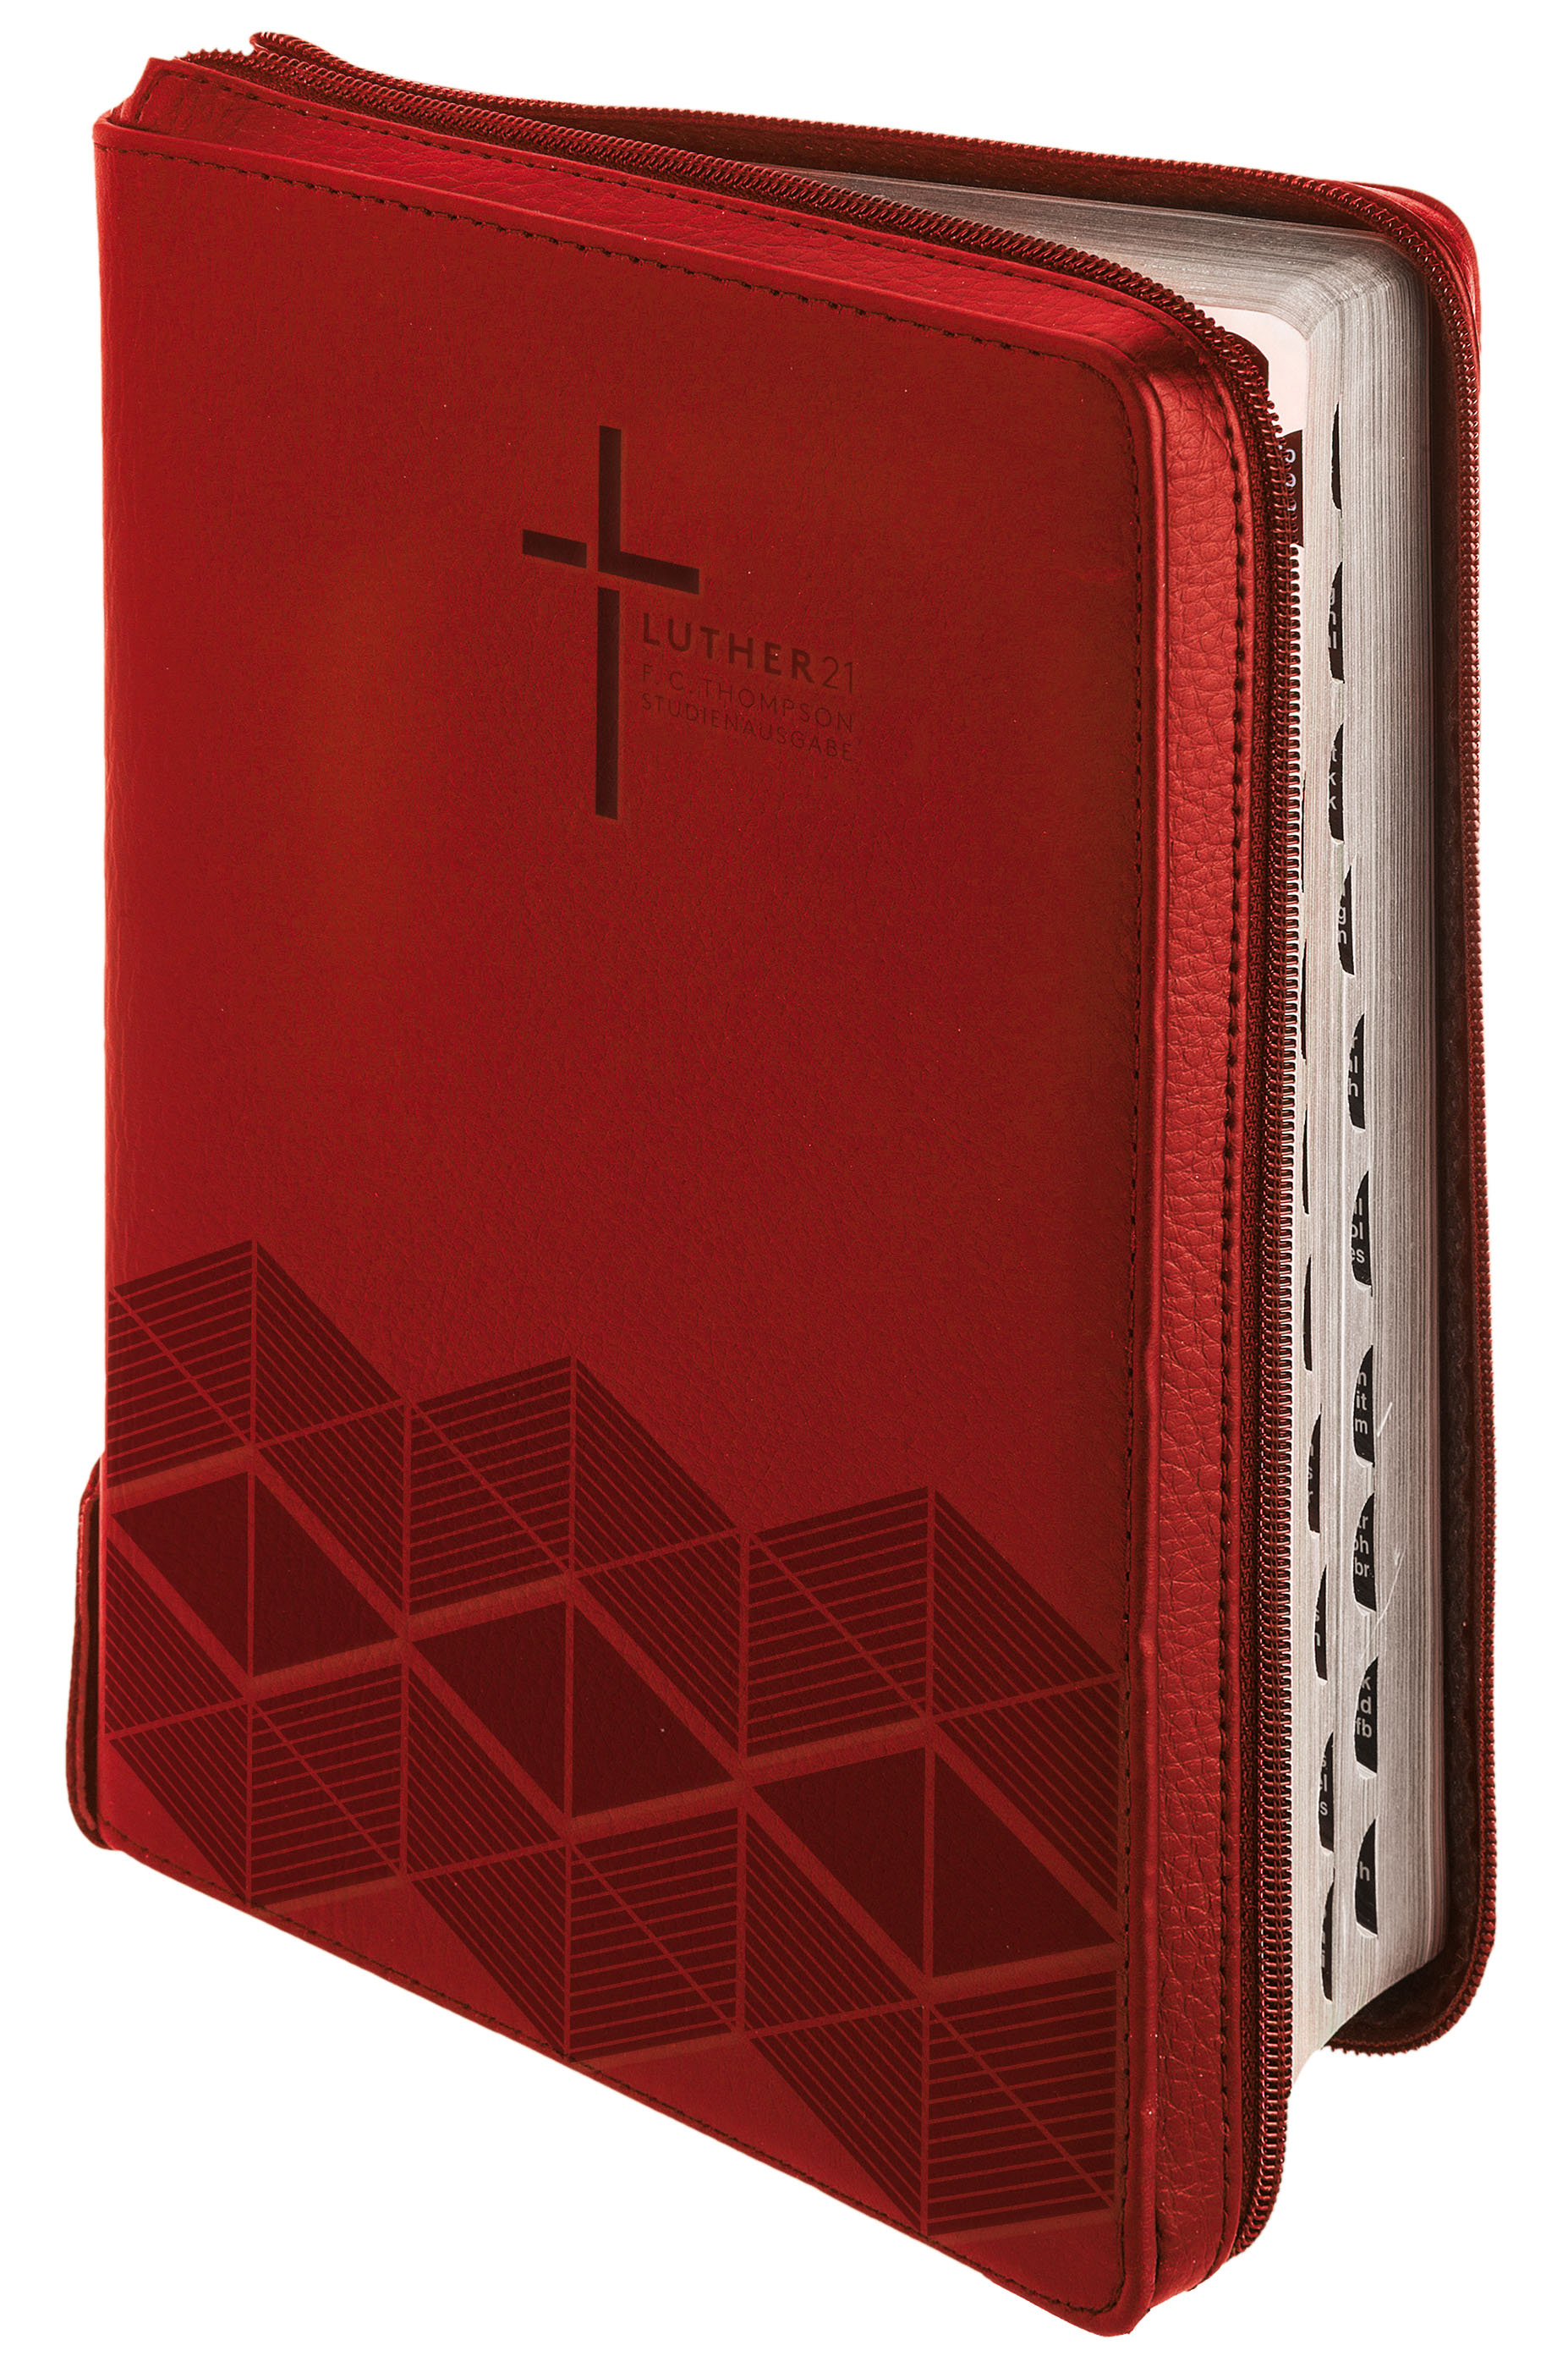 Luther 21 Thompson Studienbibel, Kunstleder rot, Silberschn. Griffreg. RV - Worte Jesu rot